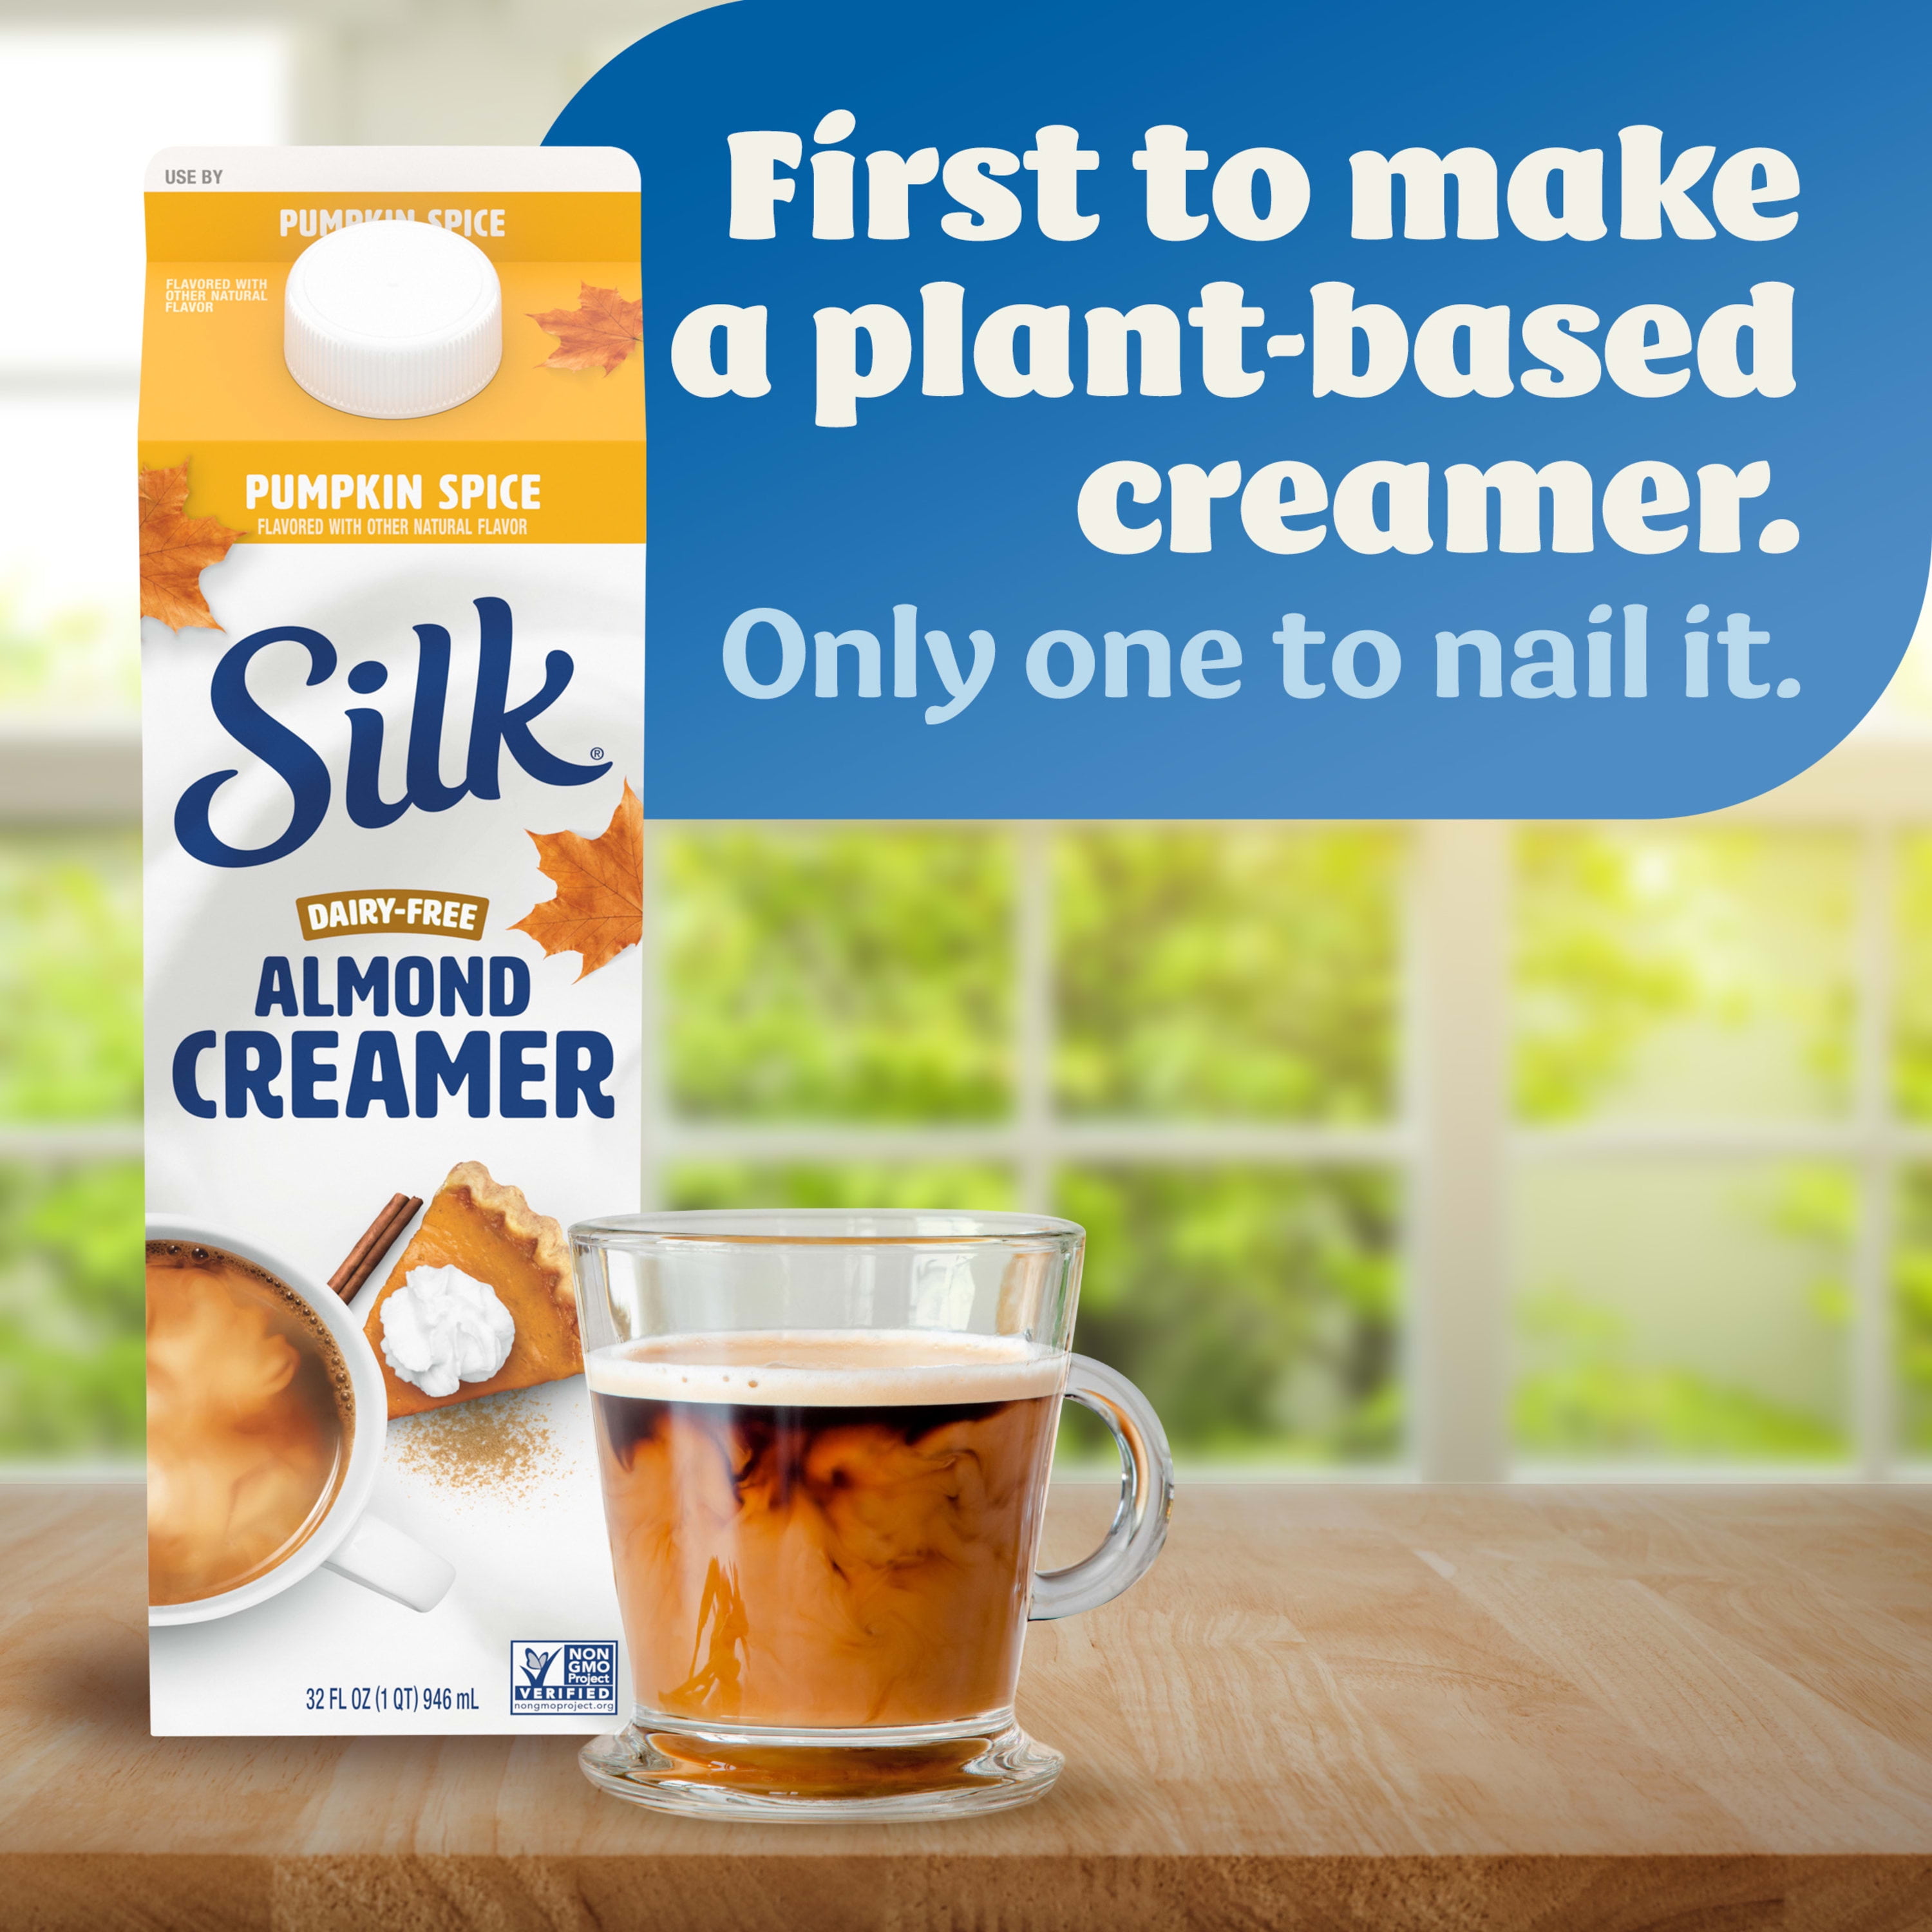 Silk debuts Pumpkin Spice beverage and creamer - FoodBev Media